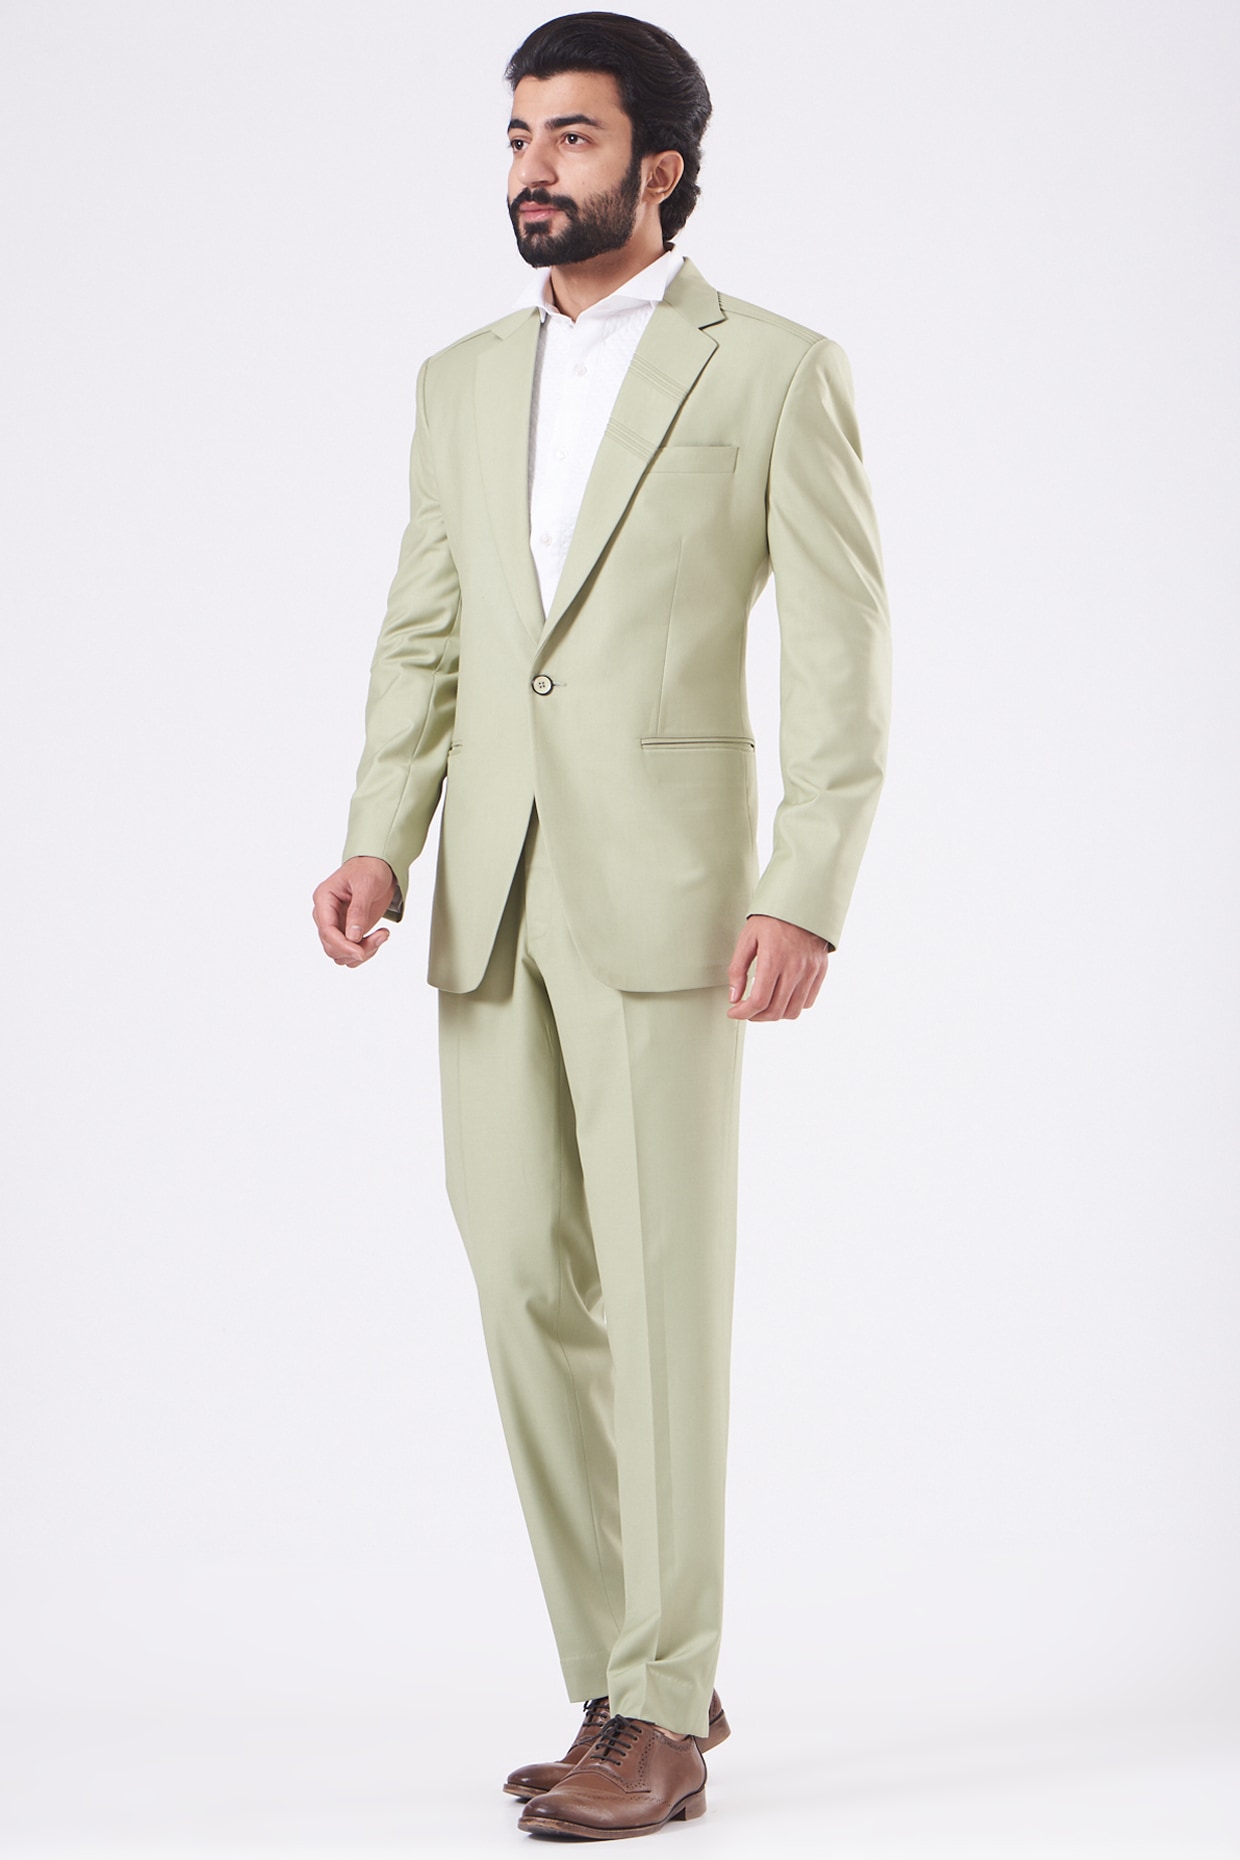 Buy WINTAGE Men's Regular Fit 3-Piece Suit (3pc1210color9s36_Beige_36) at  Amazon.in